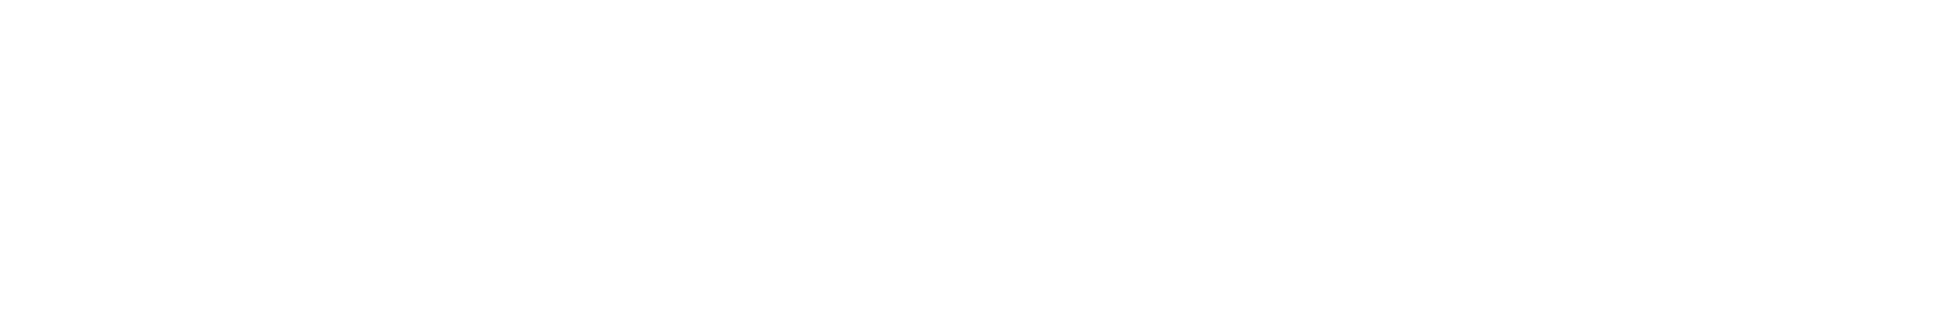 Amazon Music Monochrome Logo